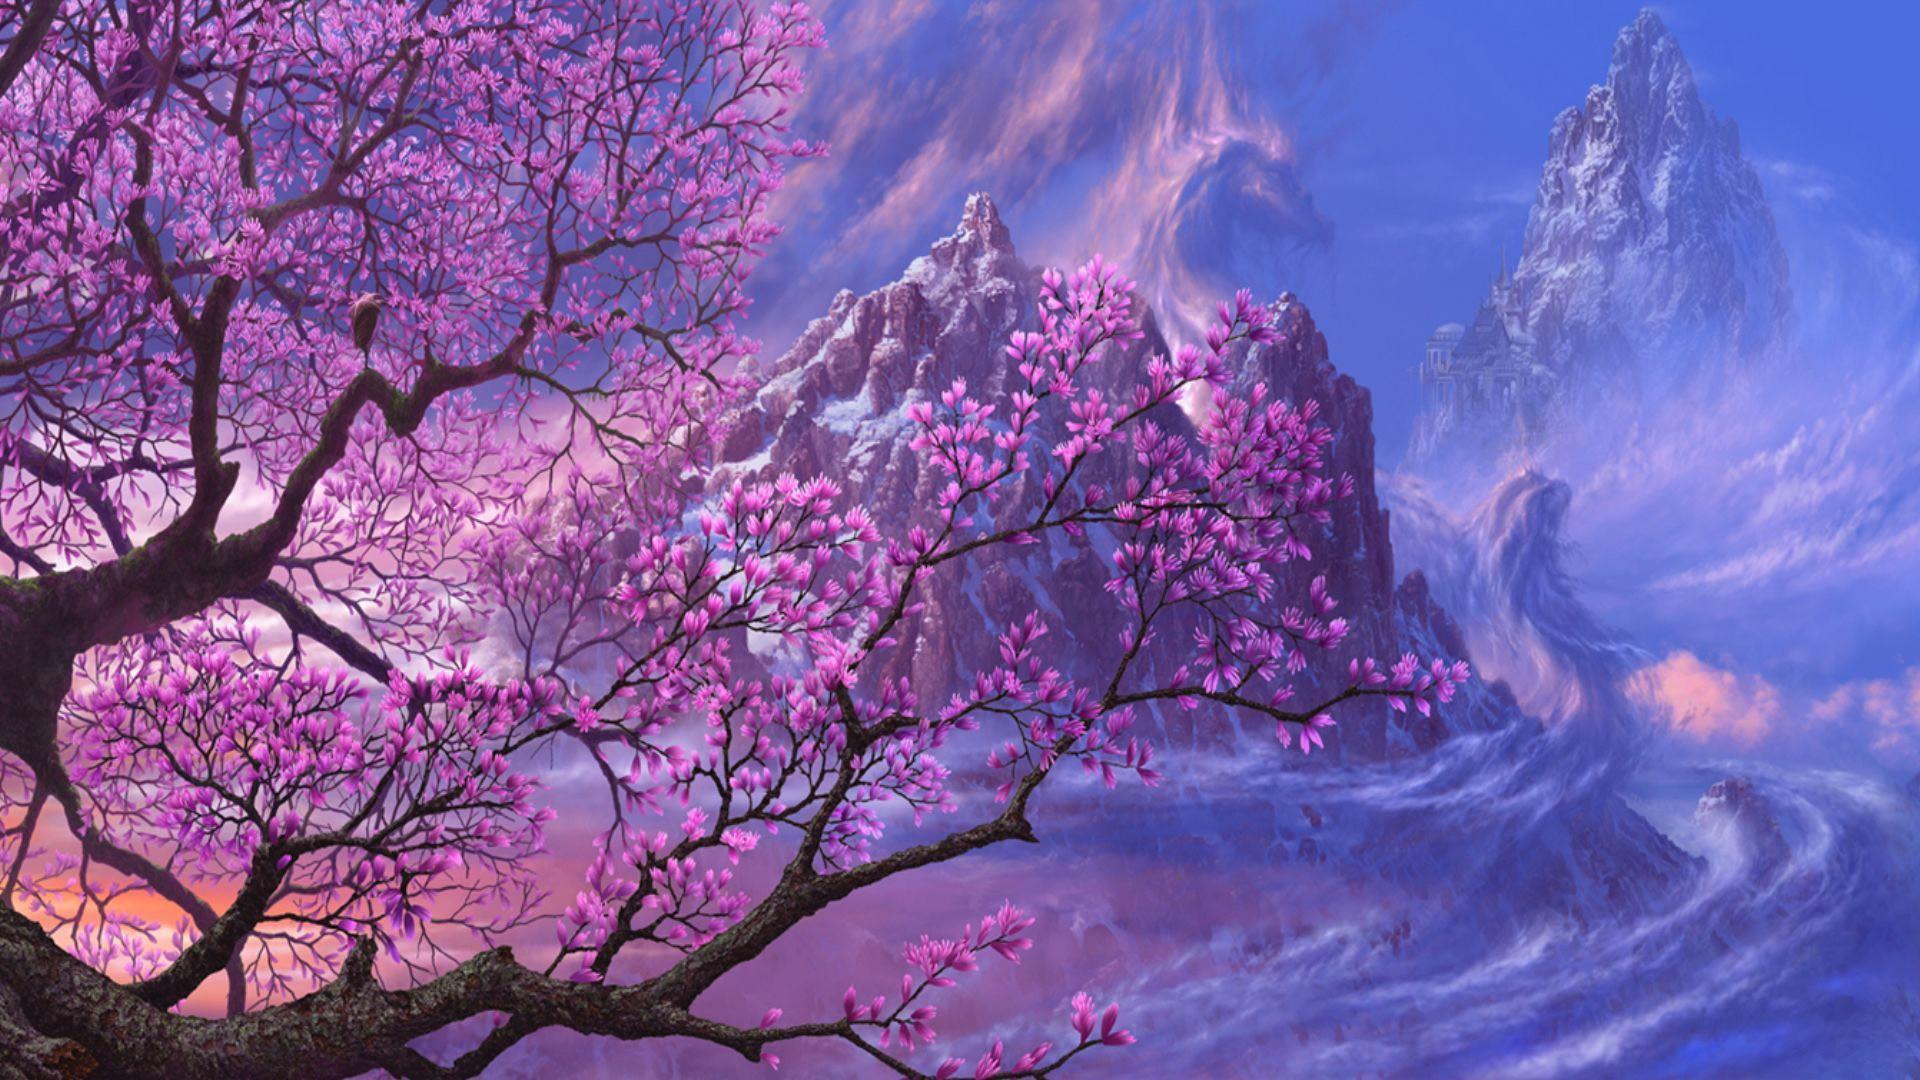 Anime Artwork Asia Dragons Fantasy Art Purple Trees